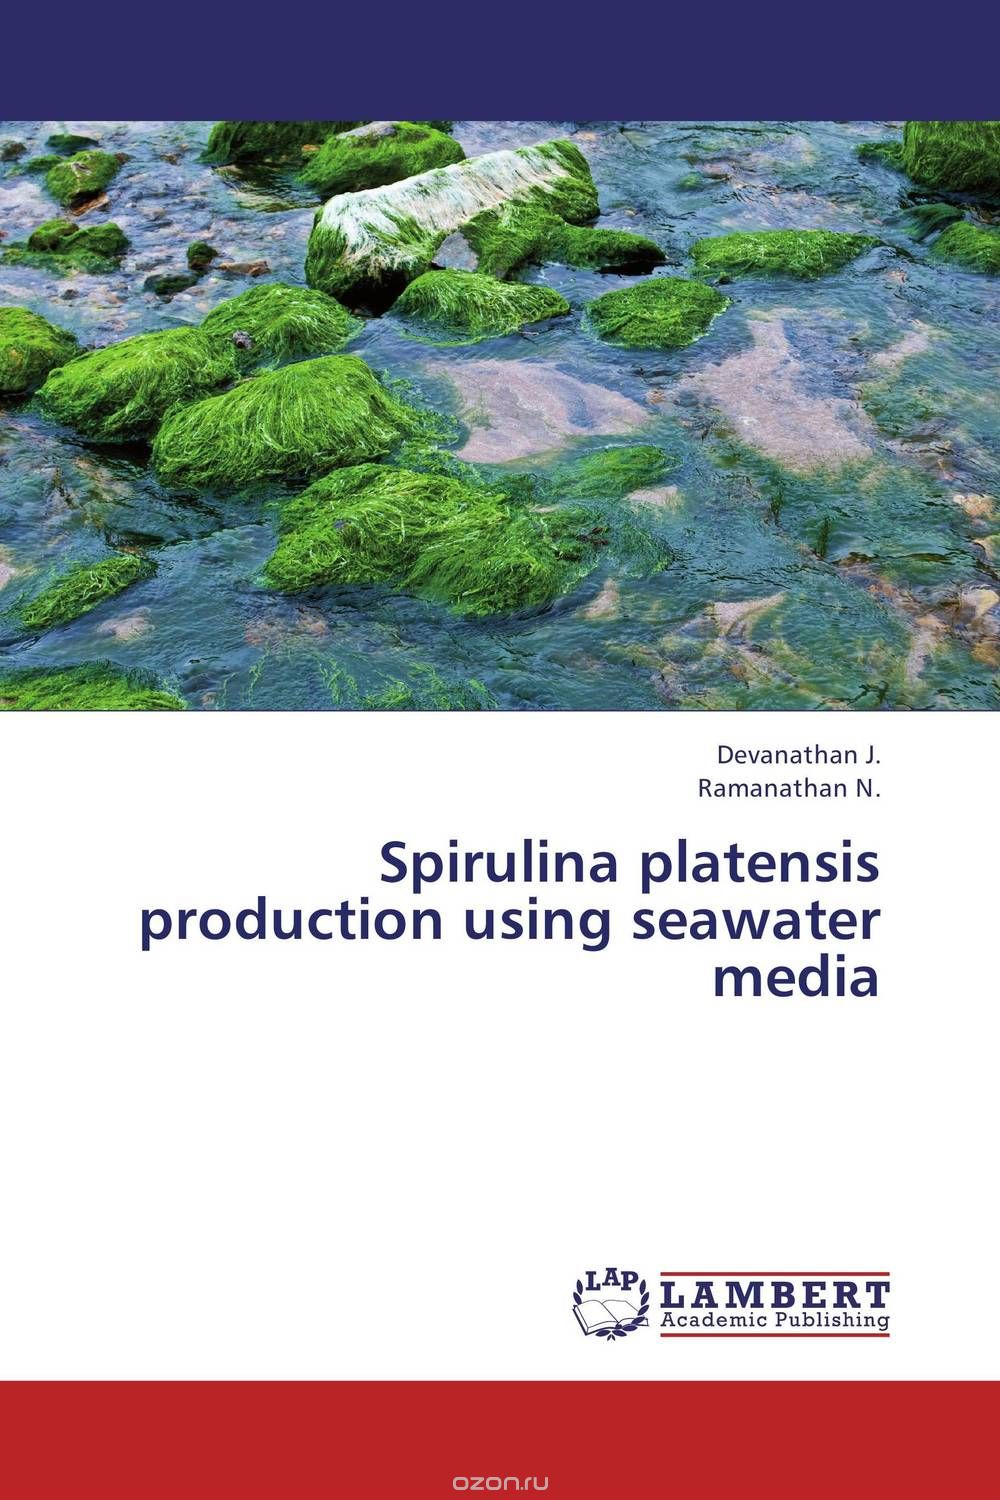 Скачать книгу "Spirulina platensis  production using seawater media"